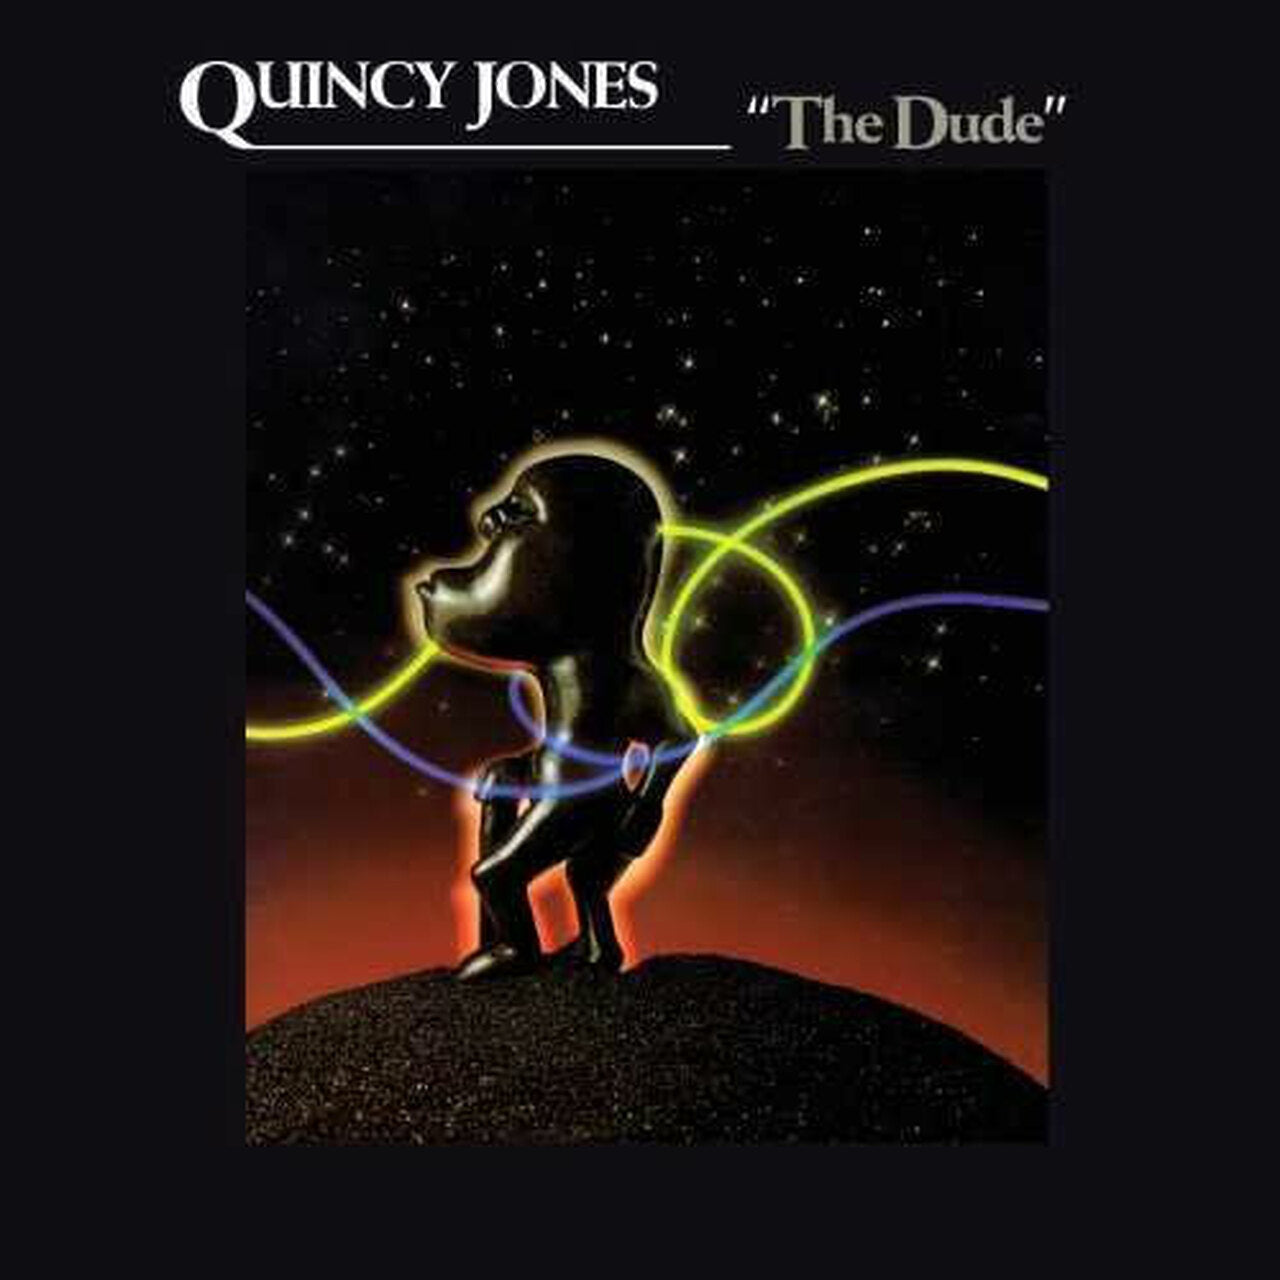 QUINCY JONES - The Dude (40th Anniv. Remastered Edition) - LP - 180g Vinyl